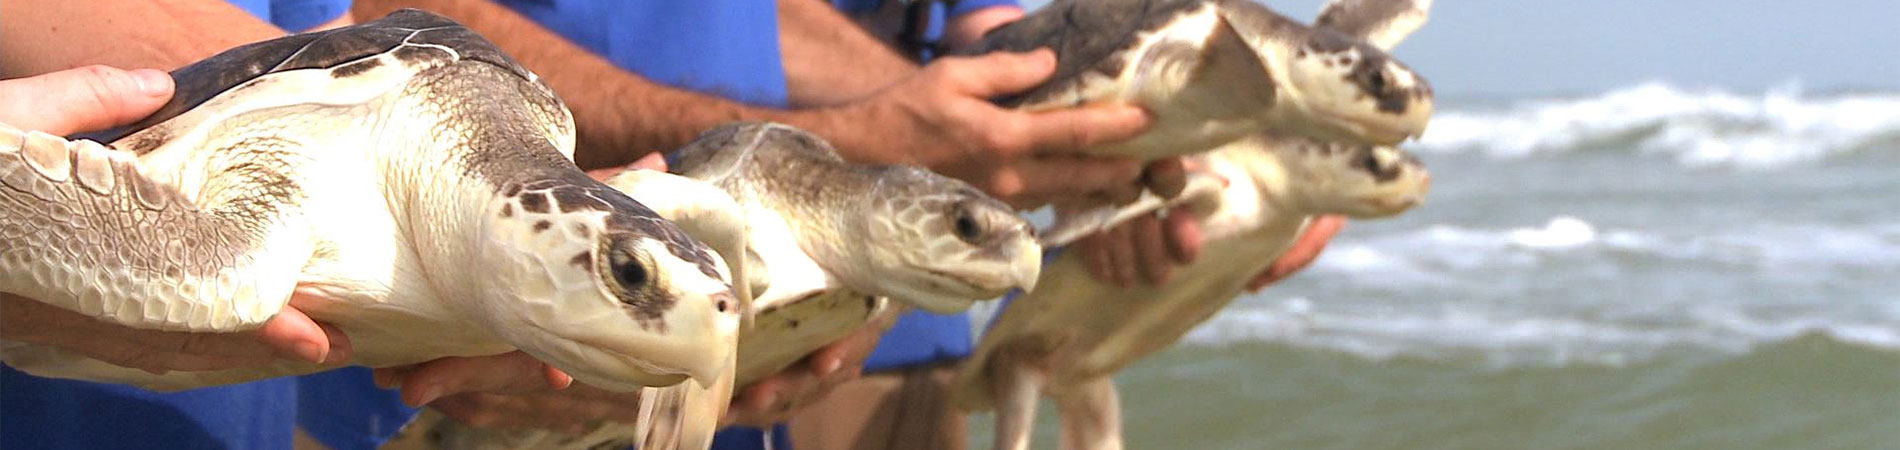 SeaWorld Turtle Release